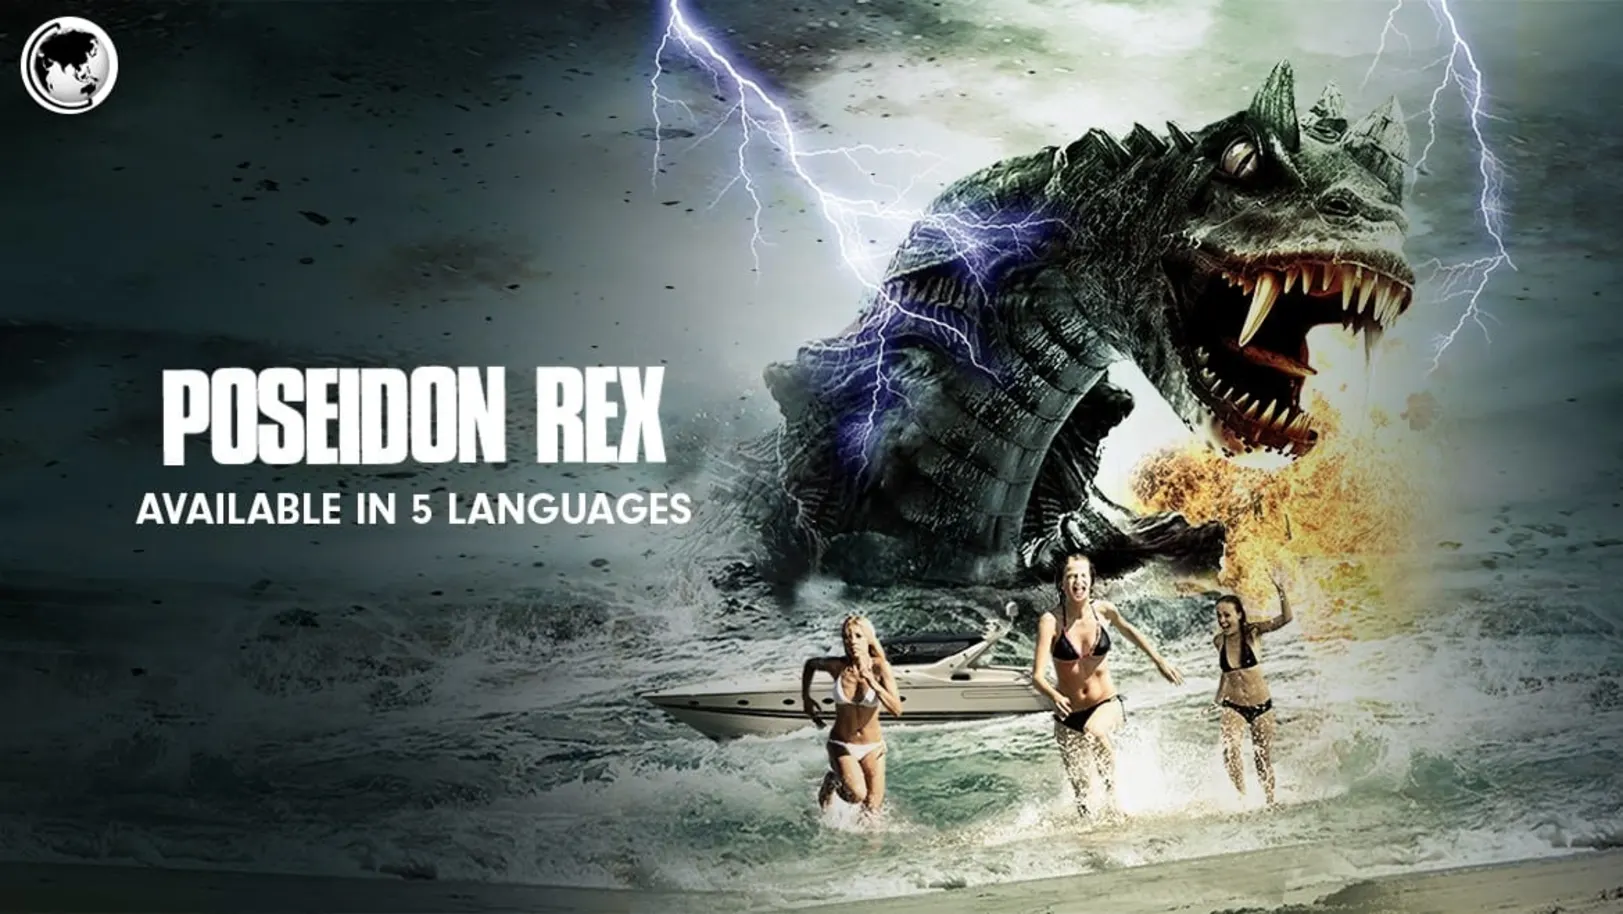 Poseidon Rex Movie